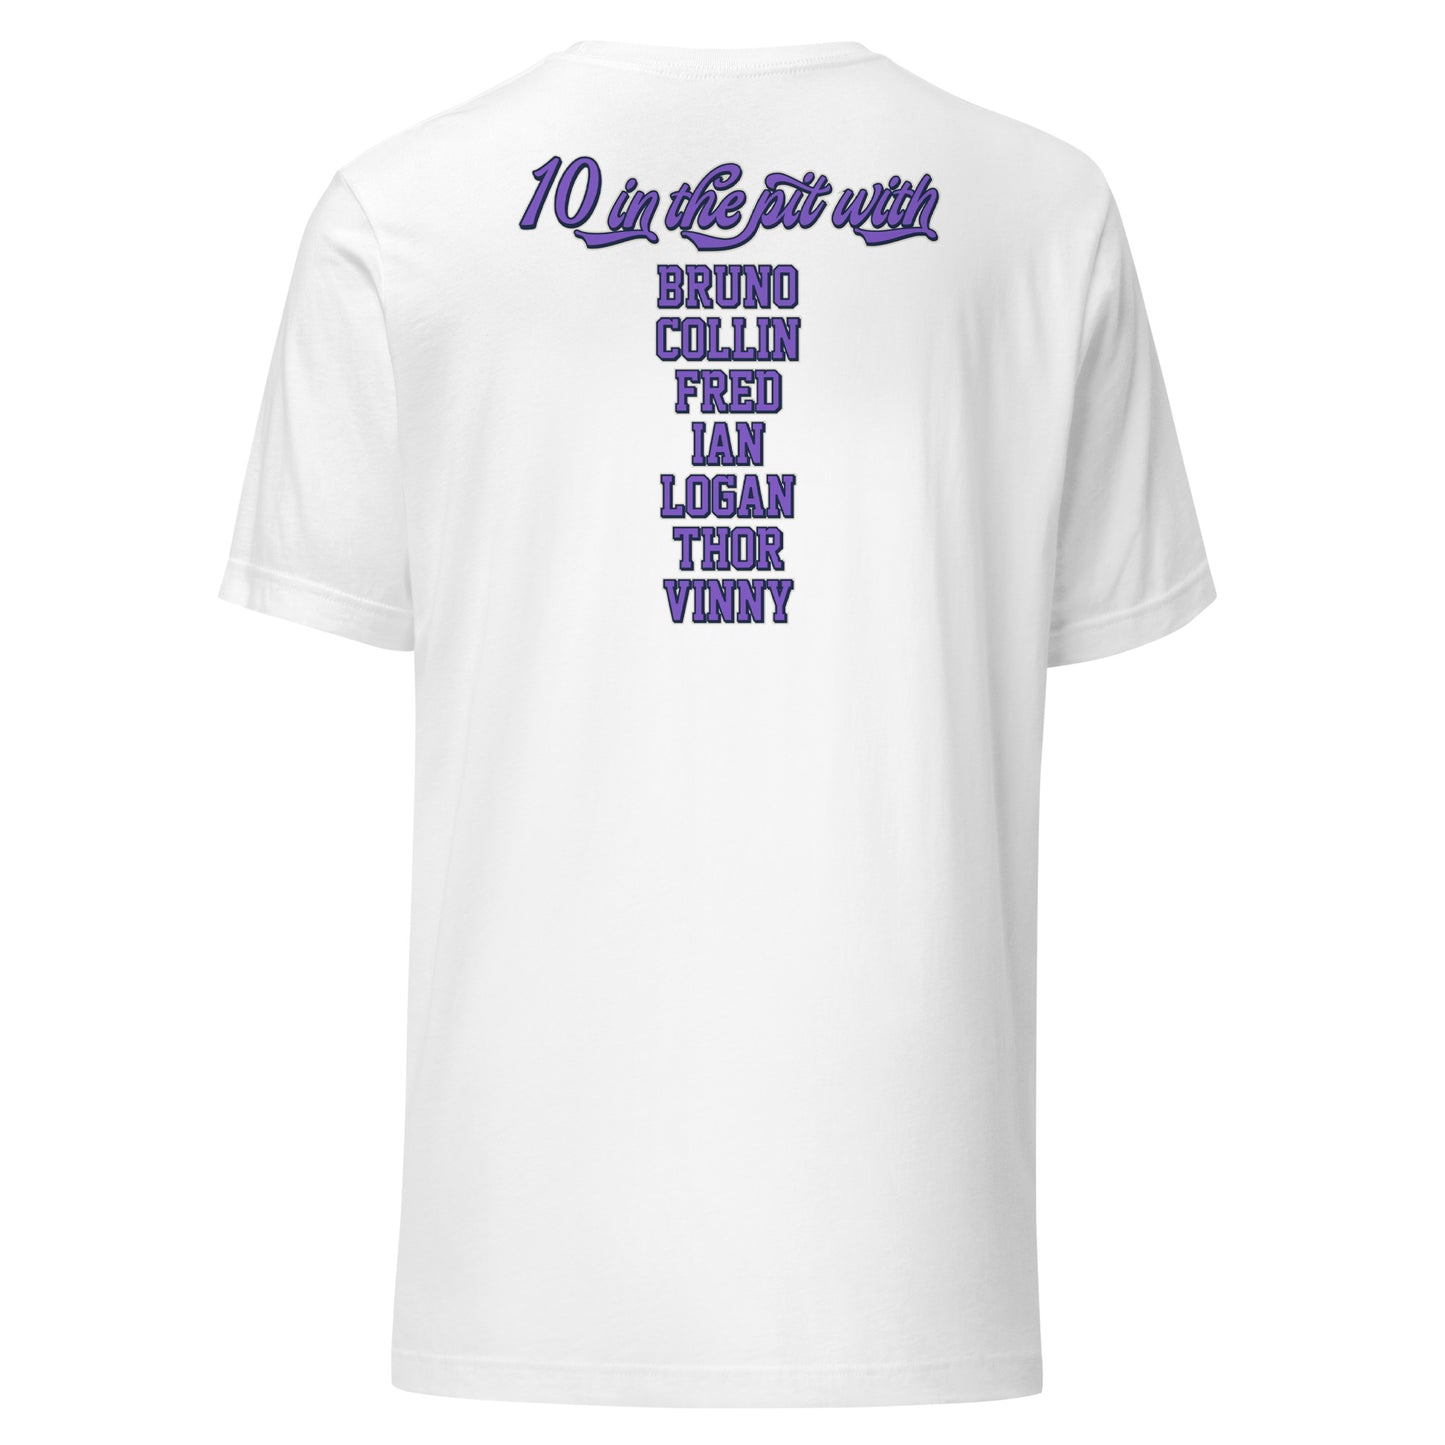 Waukesha North Bowling - Fashion - Bella Canvas - Unisex t-shirt